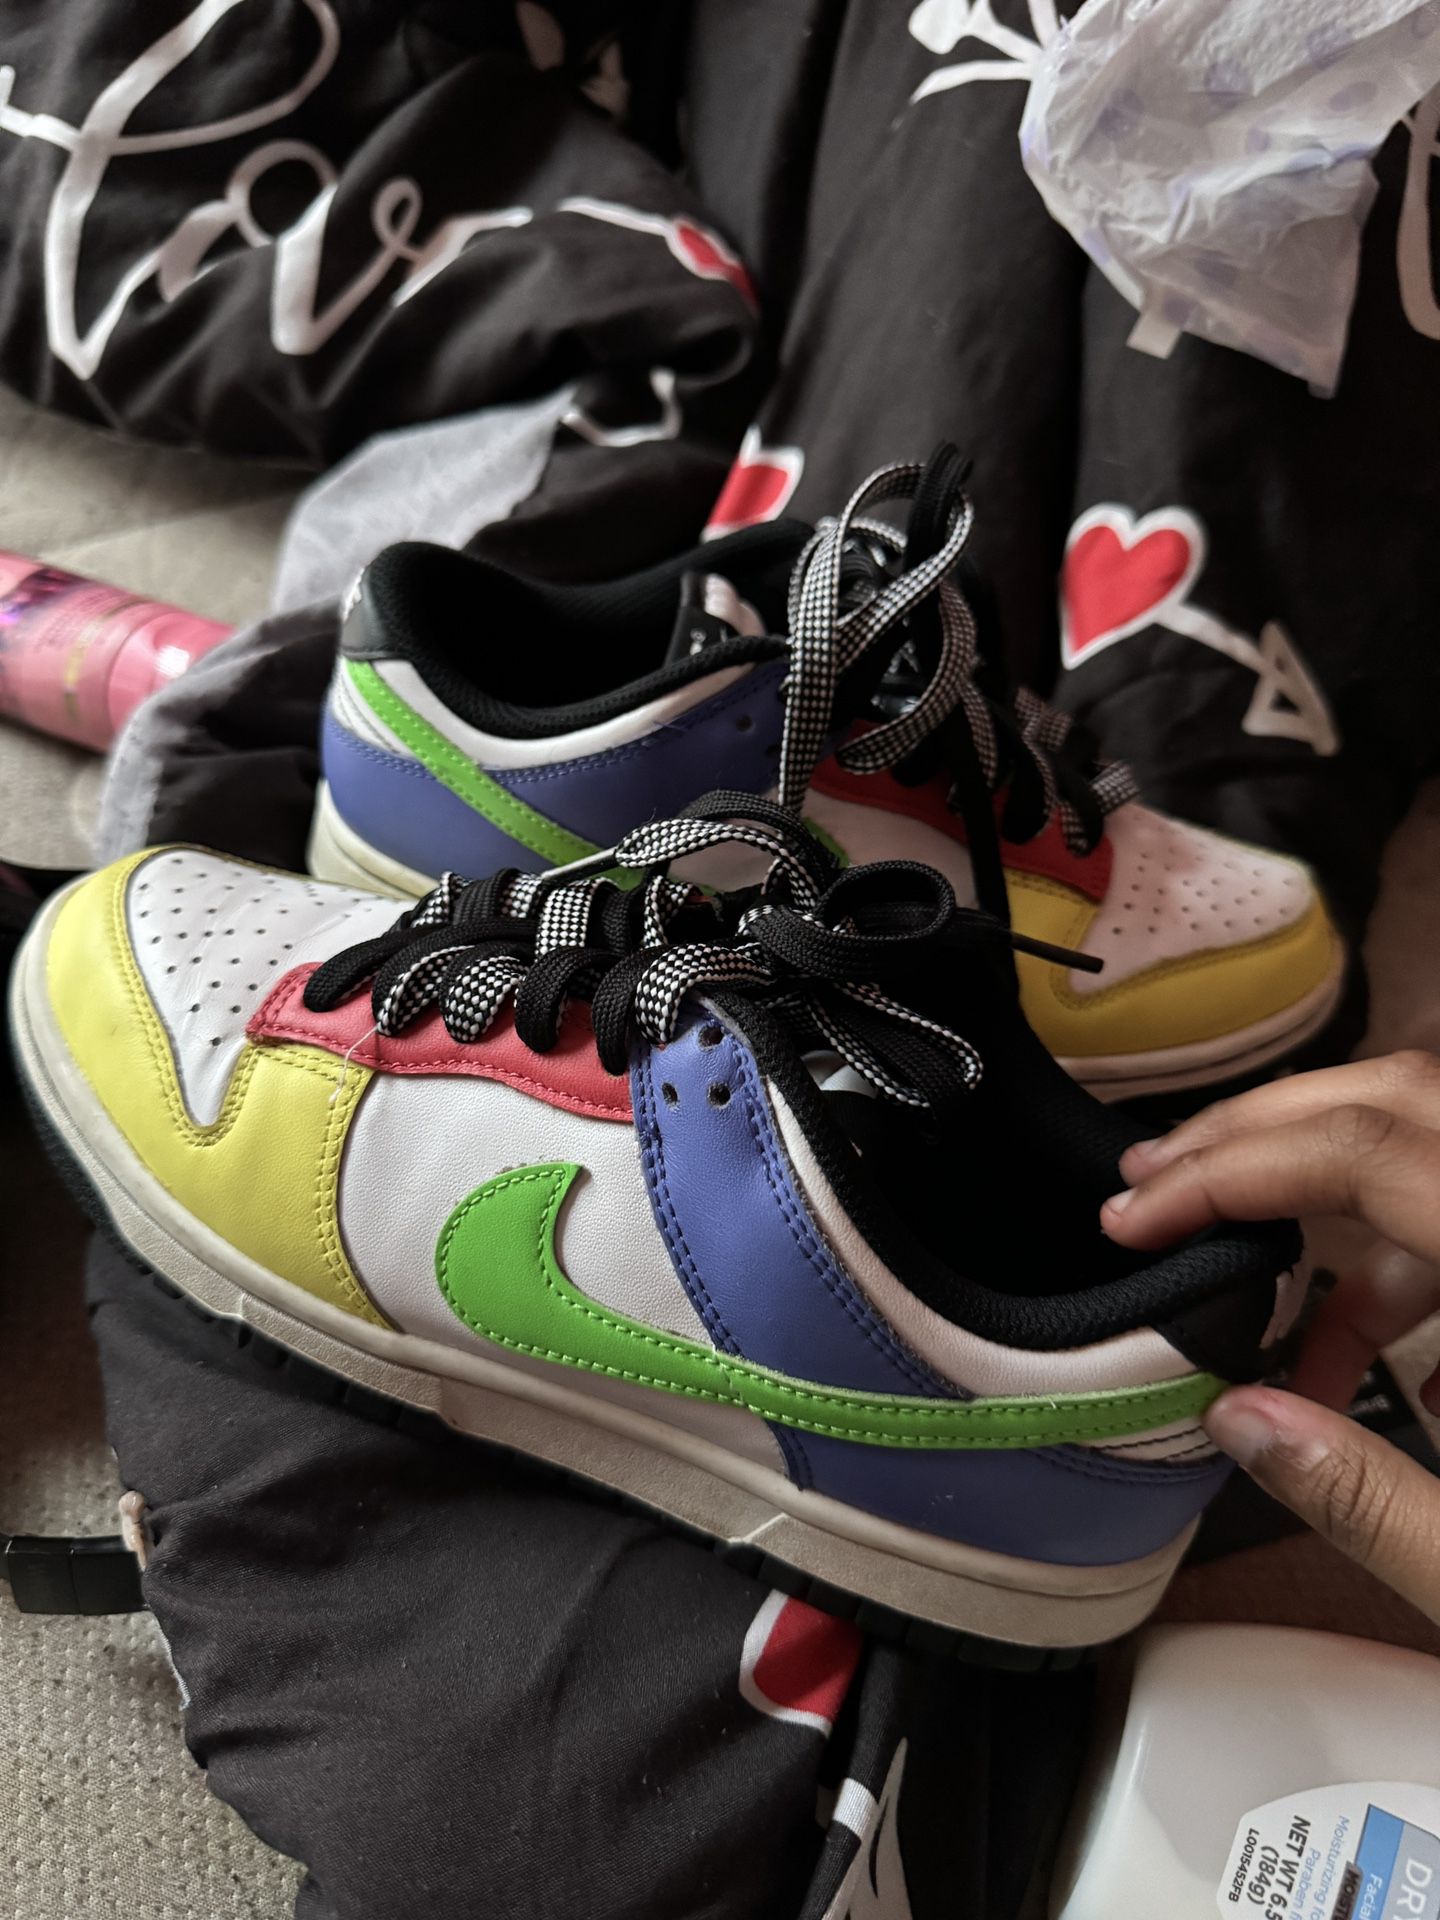 Nike dunks colorful